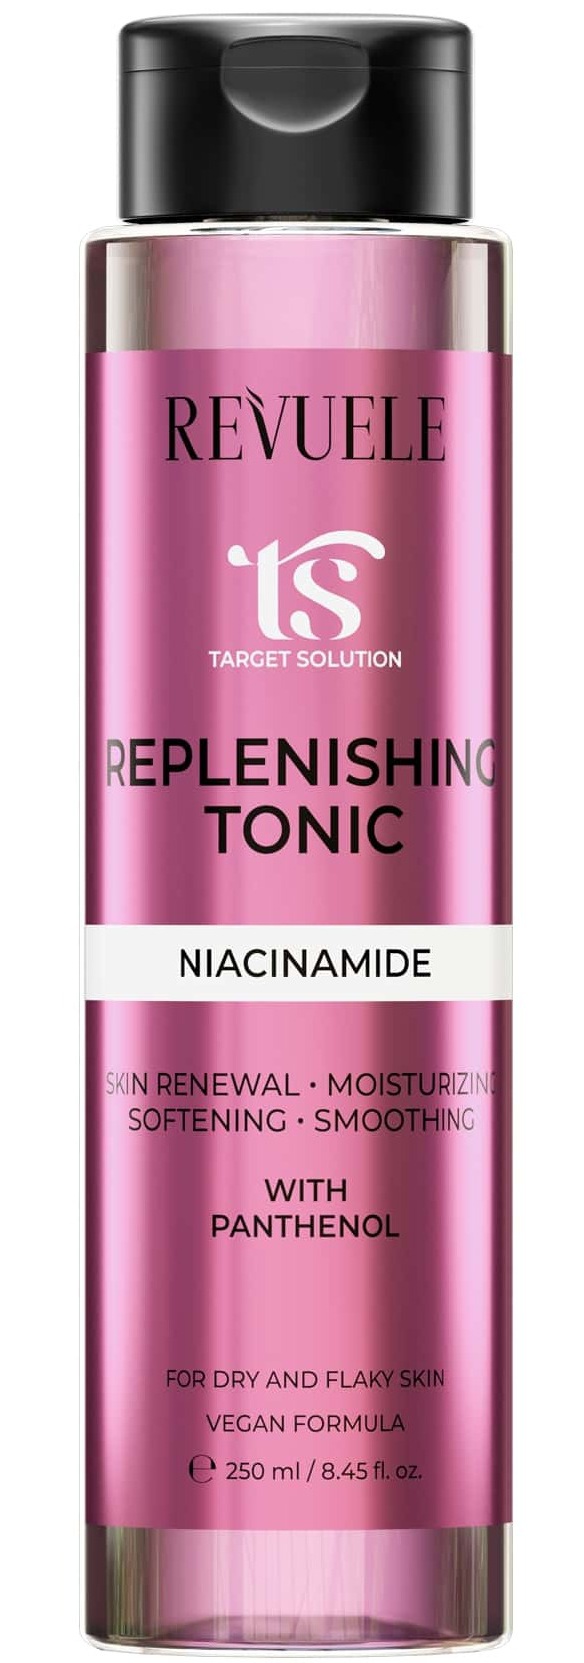 Revuele TS Replenishing Tonic Niacinamide